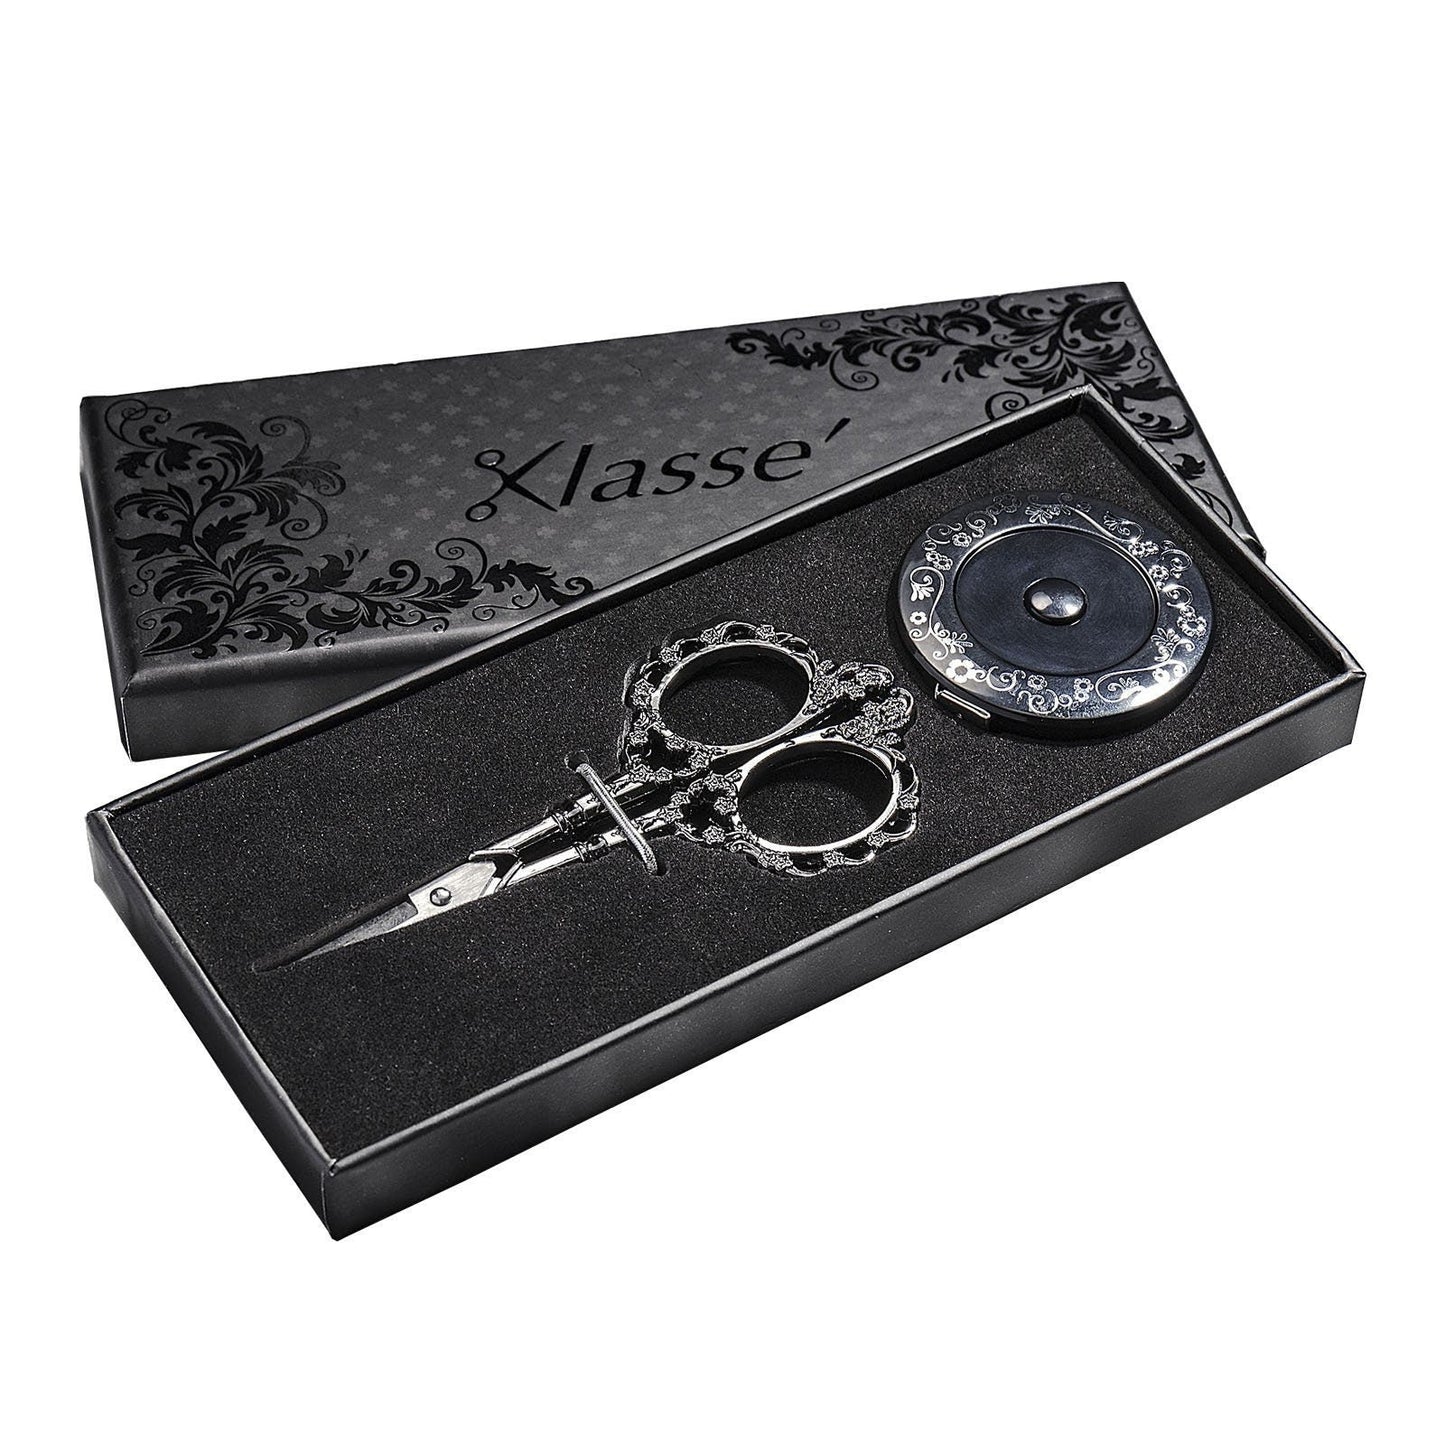 Klasse Embroidery Scissors & Retractable 60 inch tape measure boxed gift set